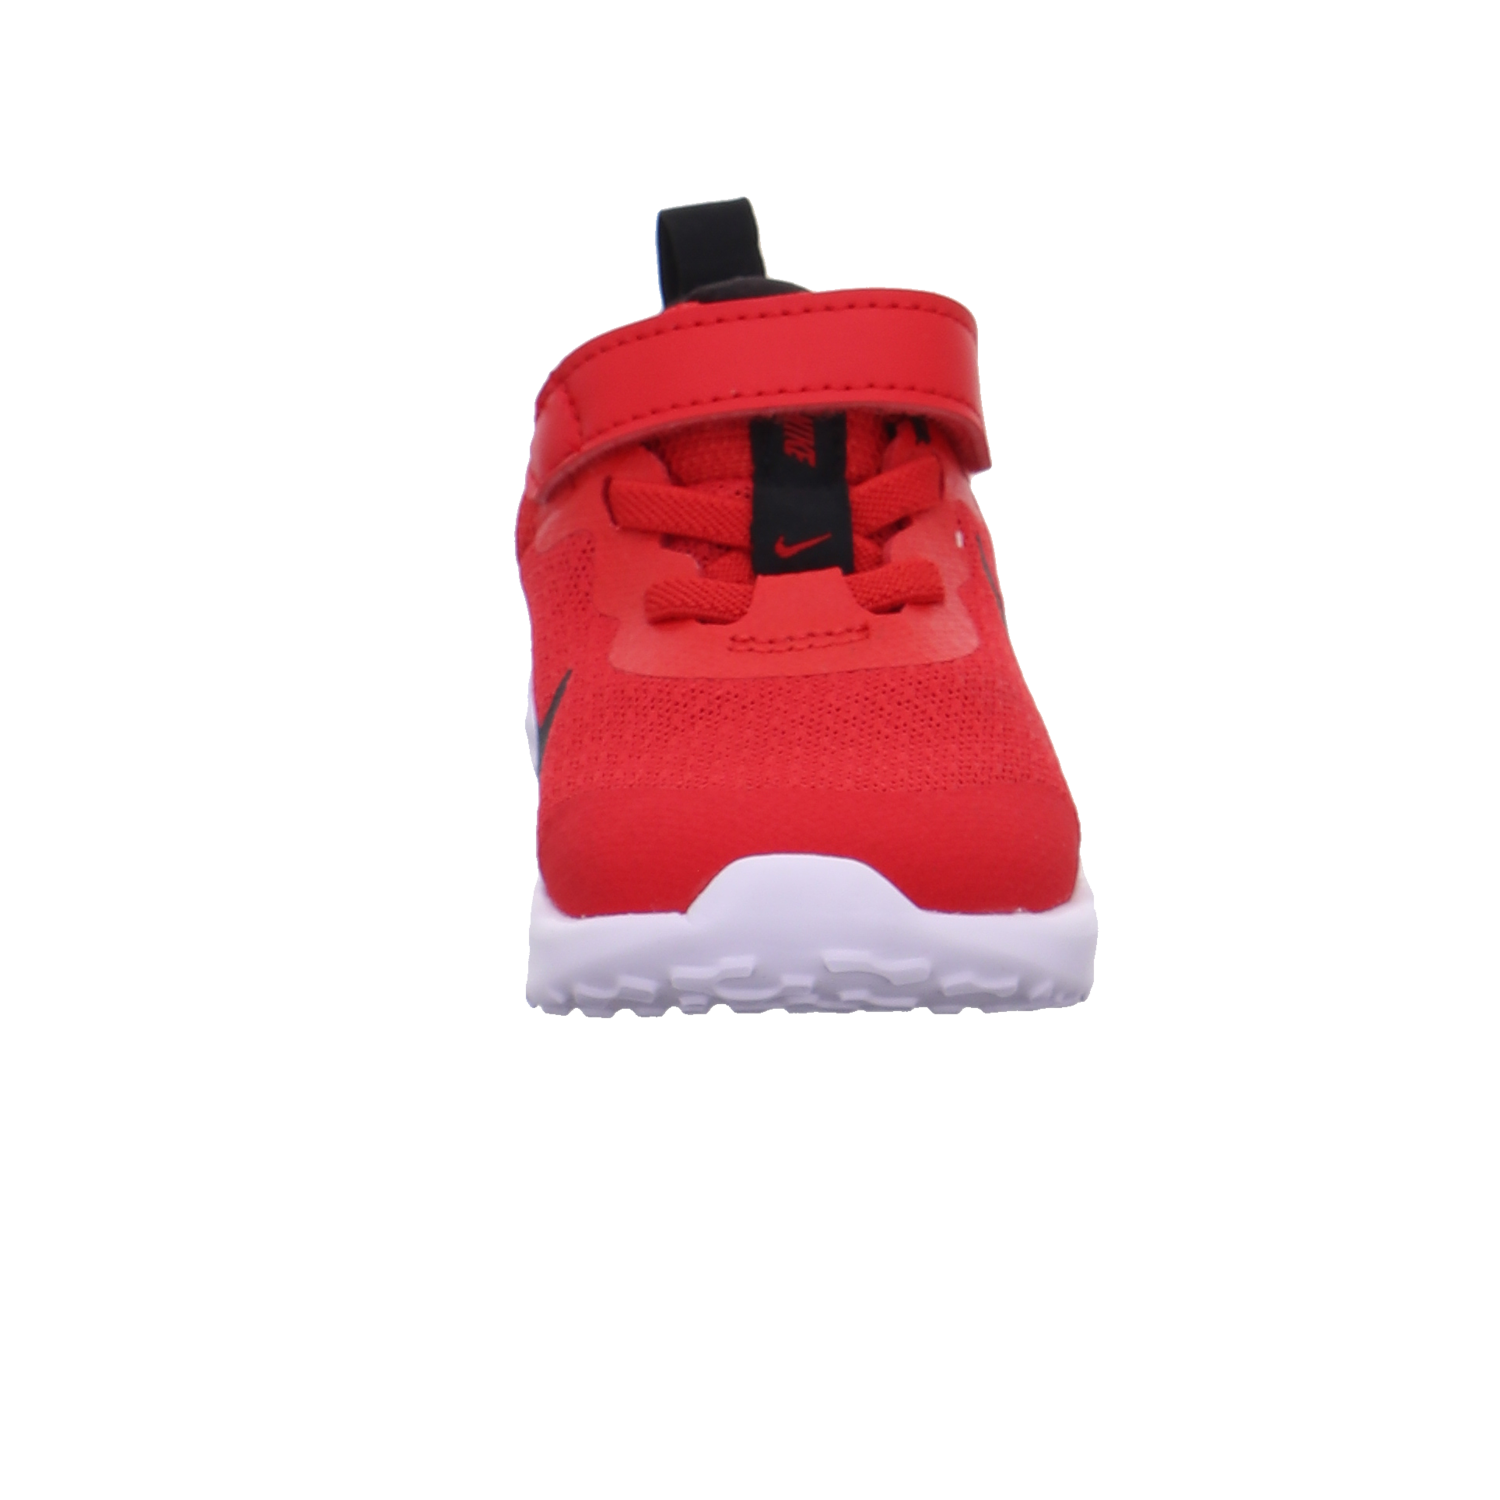 Nike Krabbel- und Lauflernschuhe rot kombi Bild3